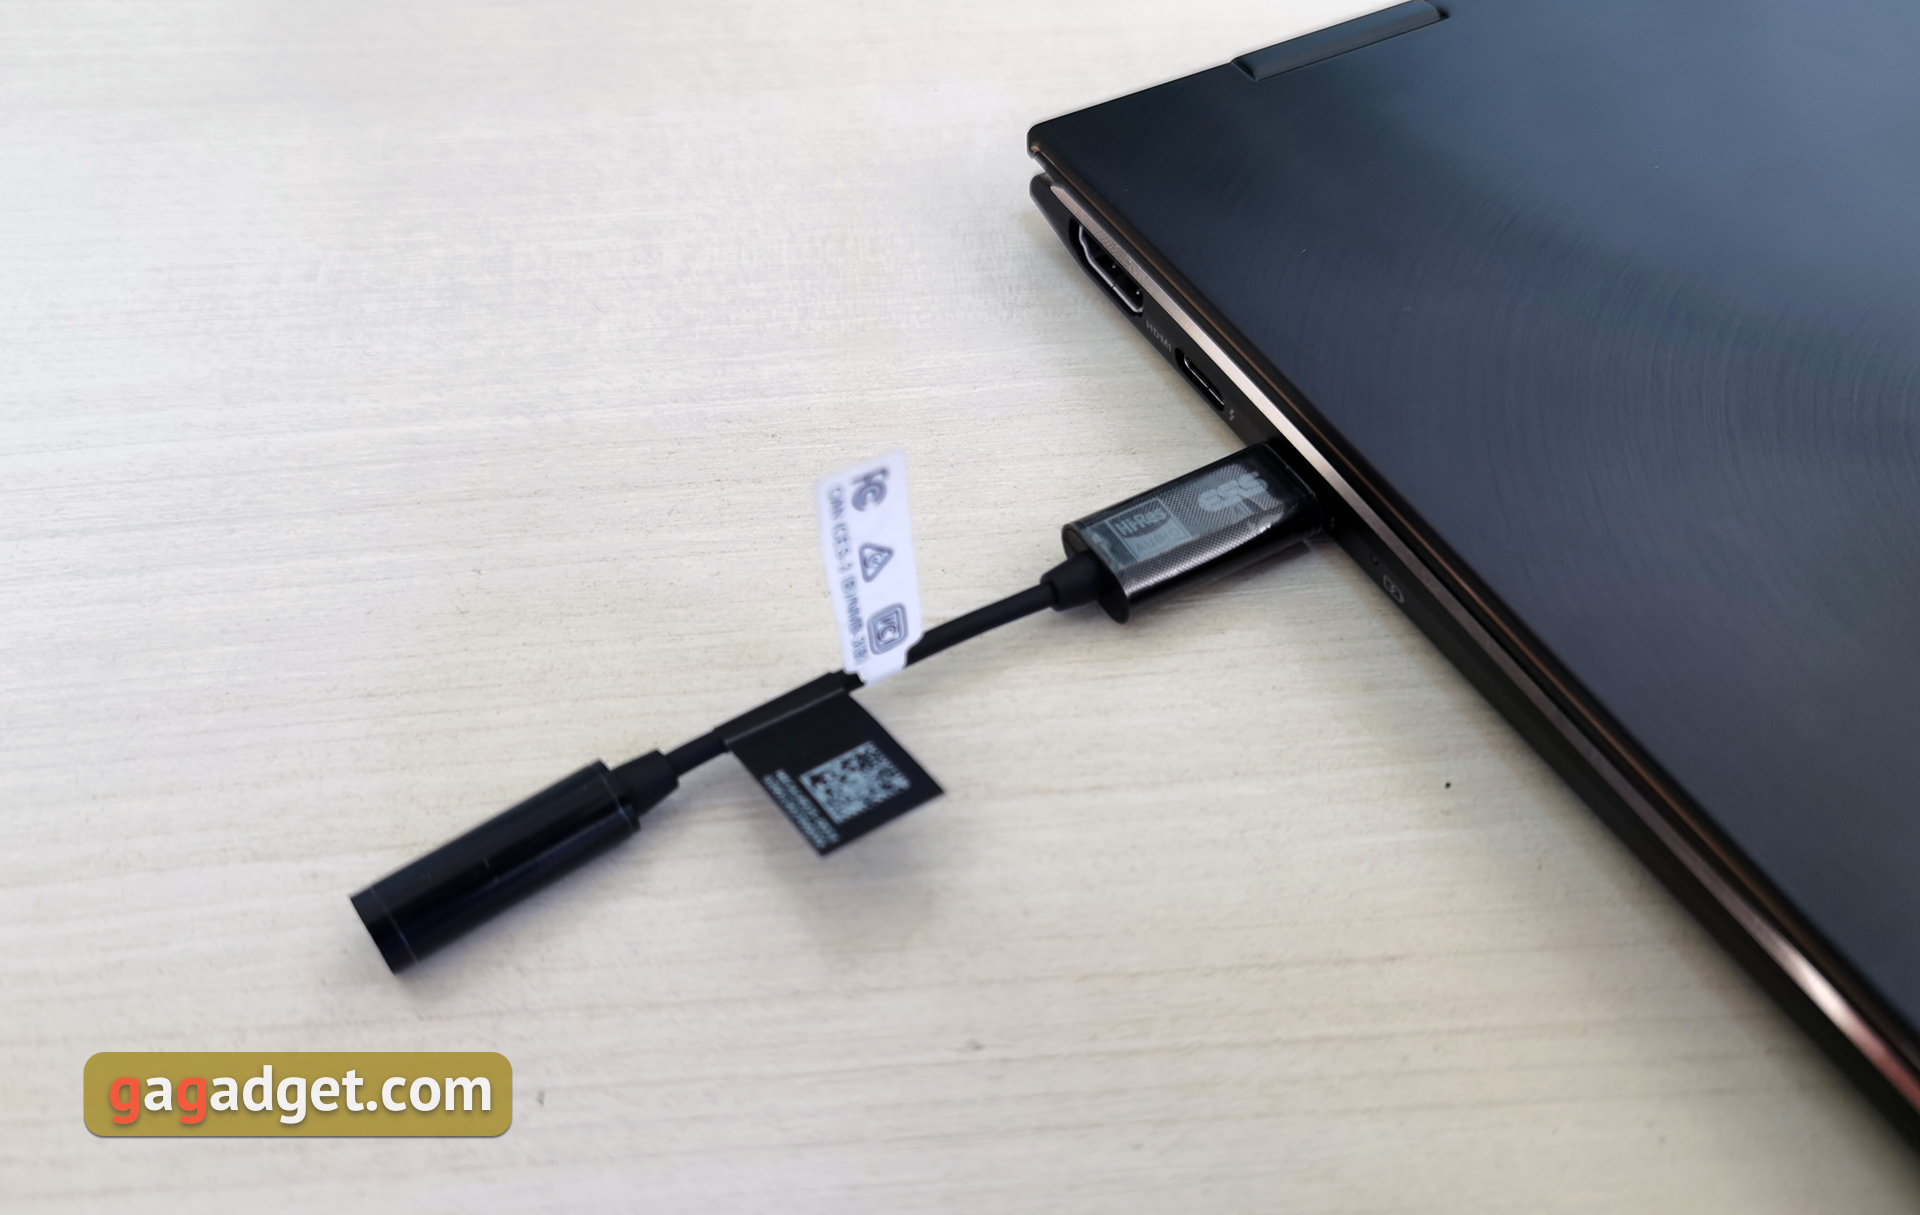 4K OLED-дисплей и процессор Intel семейства Tiger Lake. ASUS ZenBook Flip S (UX371) своими глазами-11